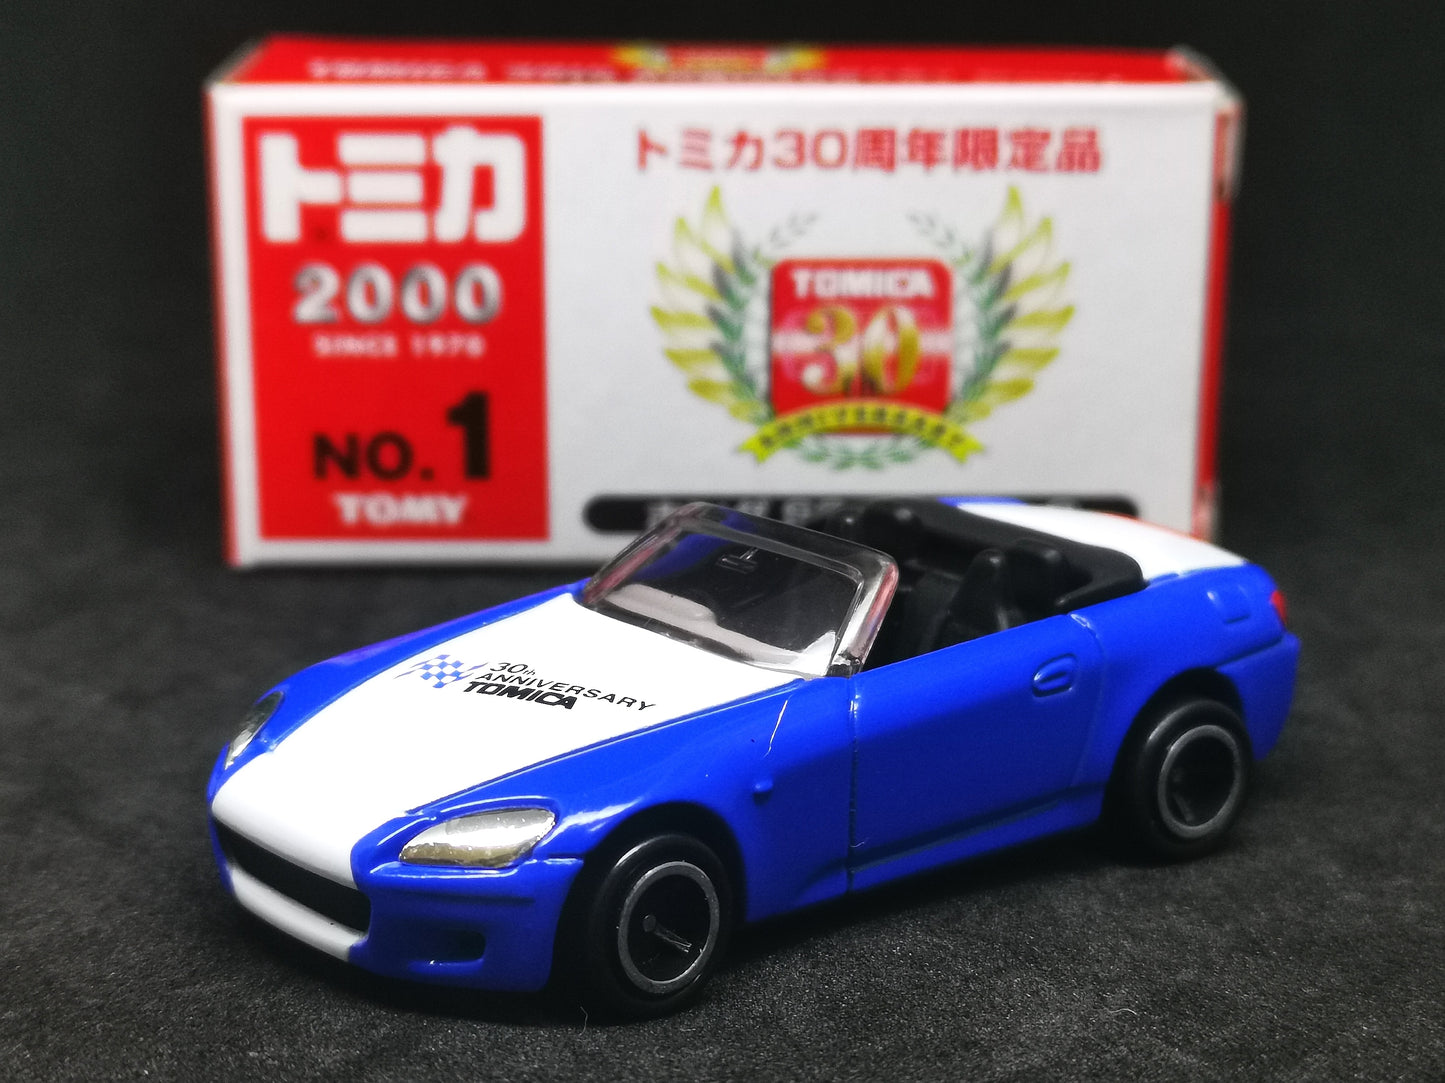 Tomica 30th Anniversary Exclusive #1 Honda S2000